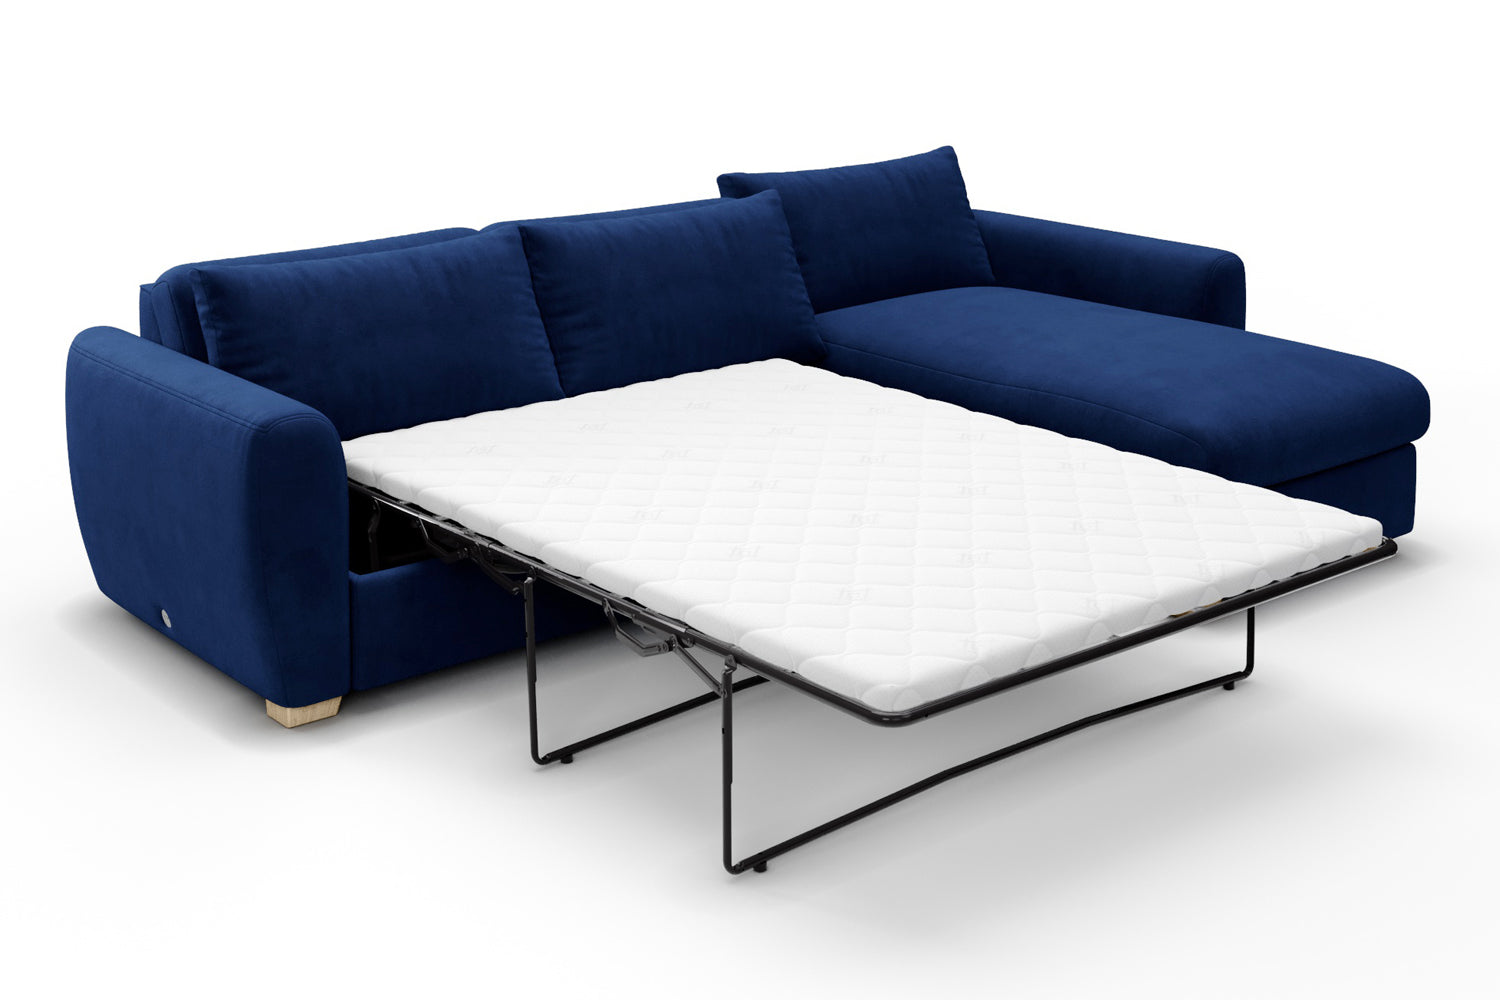 SNUG | The Cloud Sundae Chaise Sofa Bed in Midnight Blue